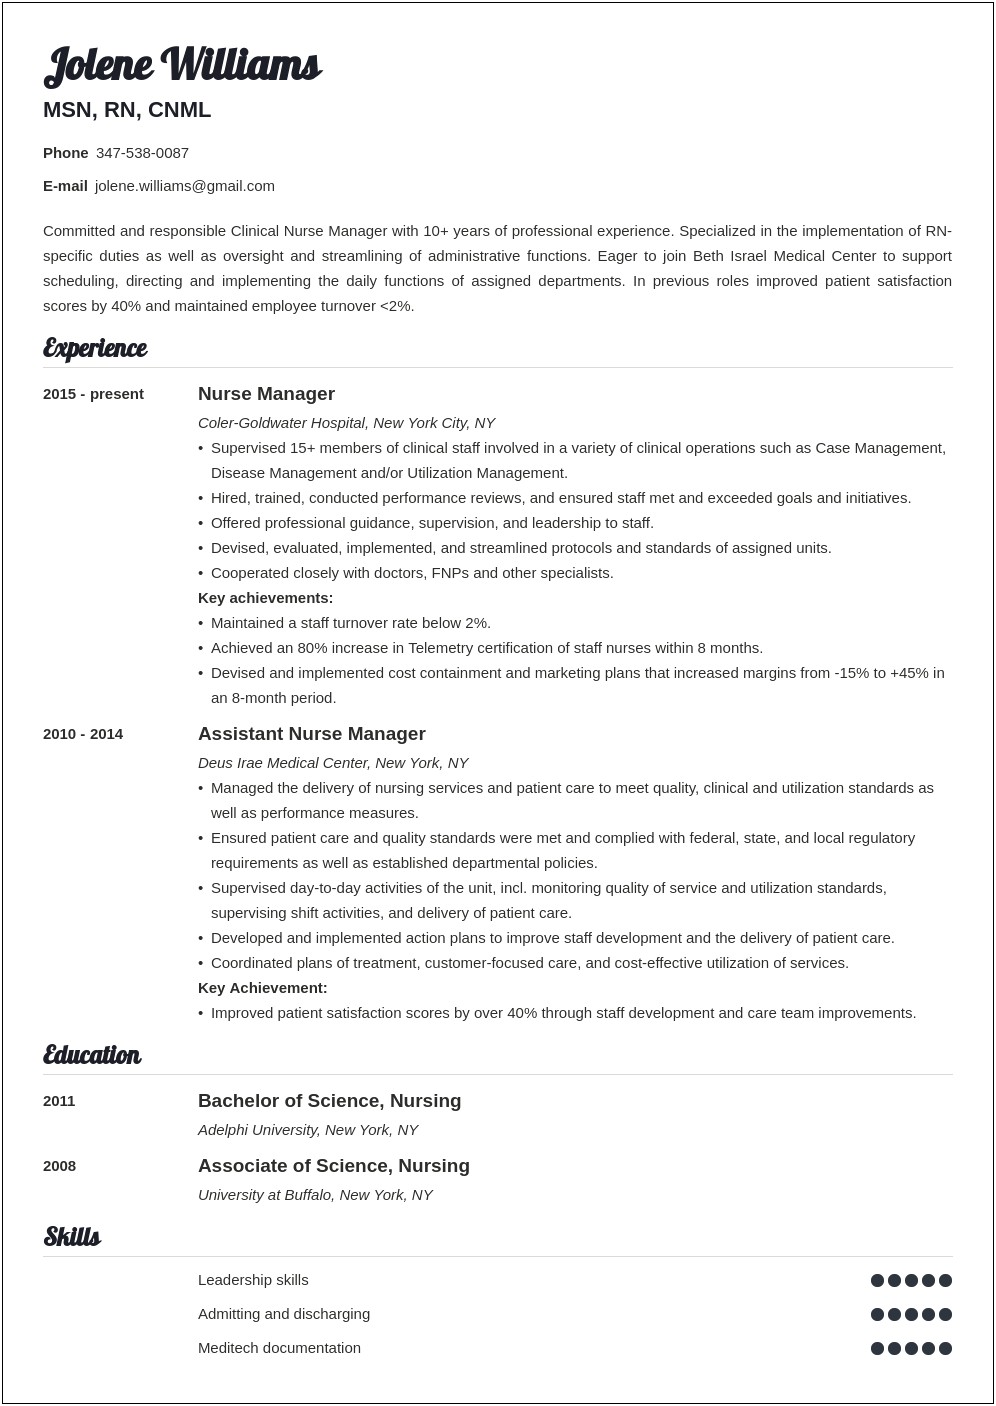 Resume Objective For Utilization Review Nurse